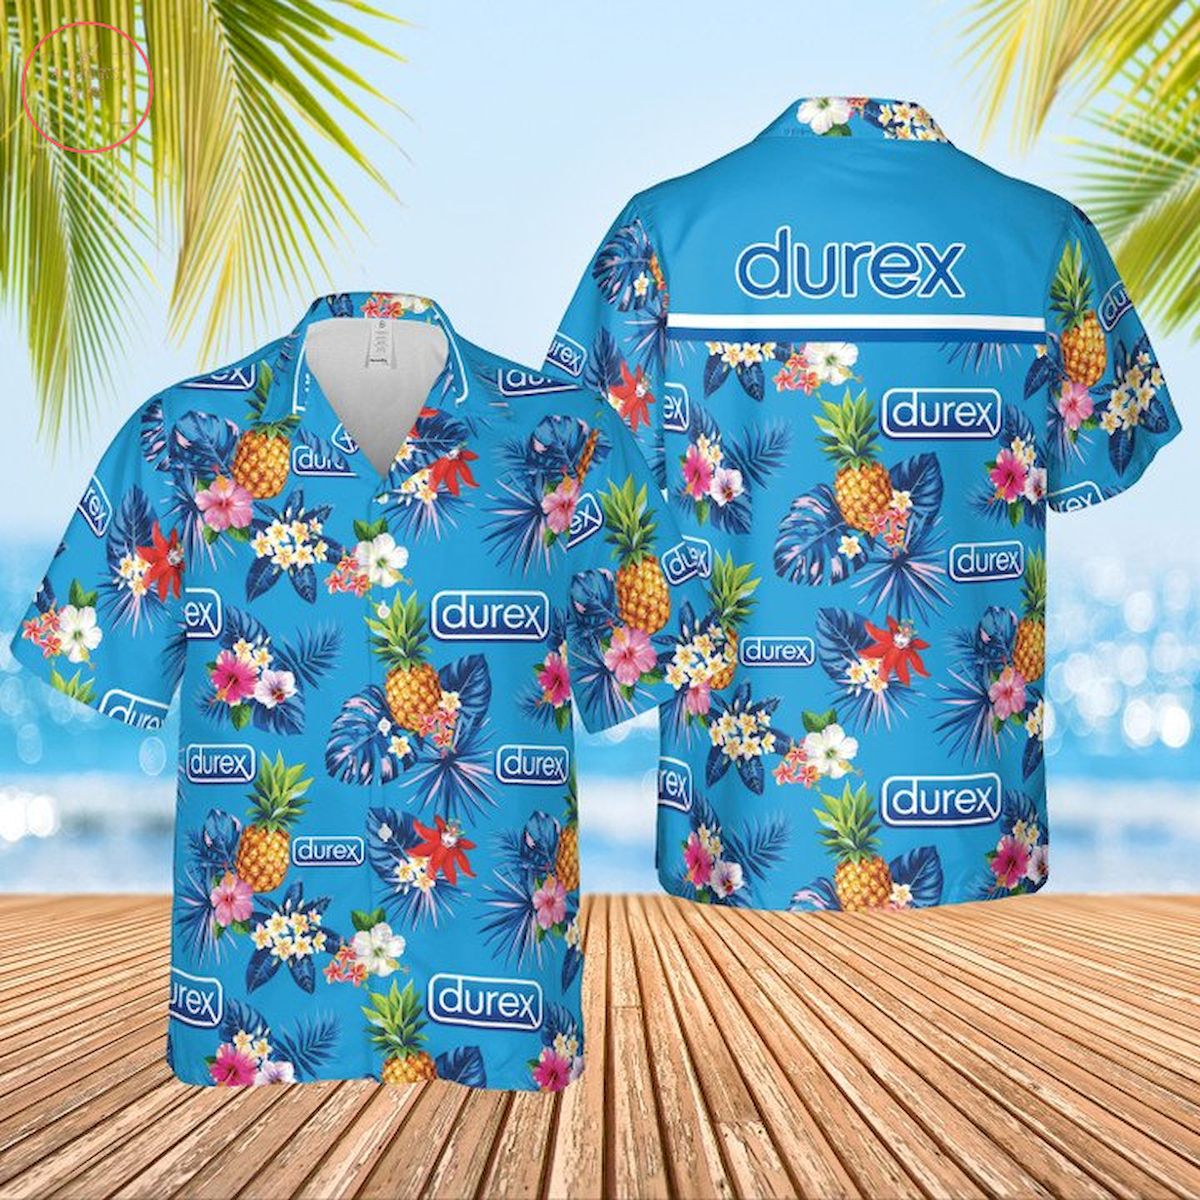 Durex Condoms Hawaiian Shirt and Shorts